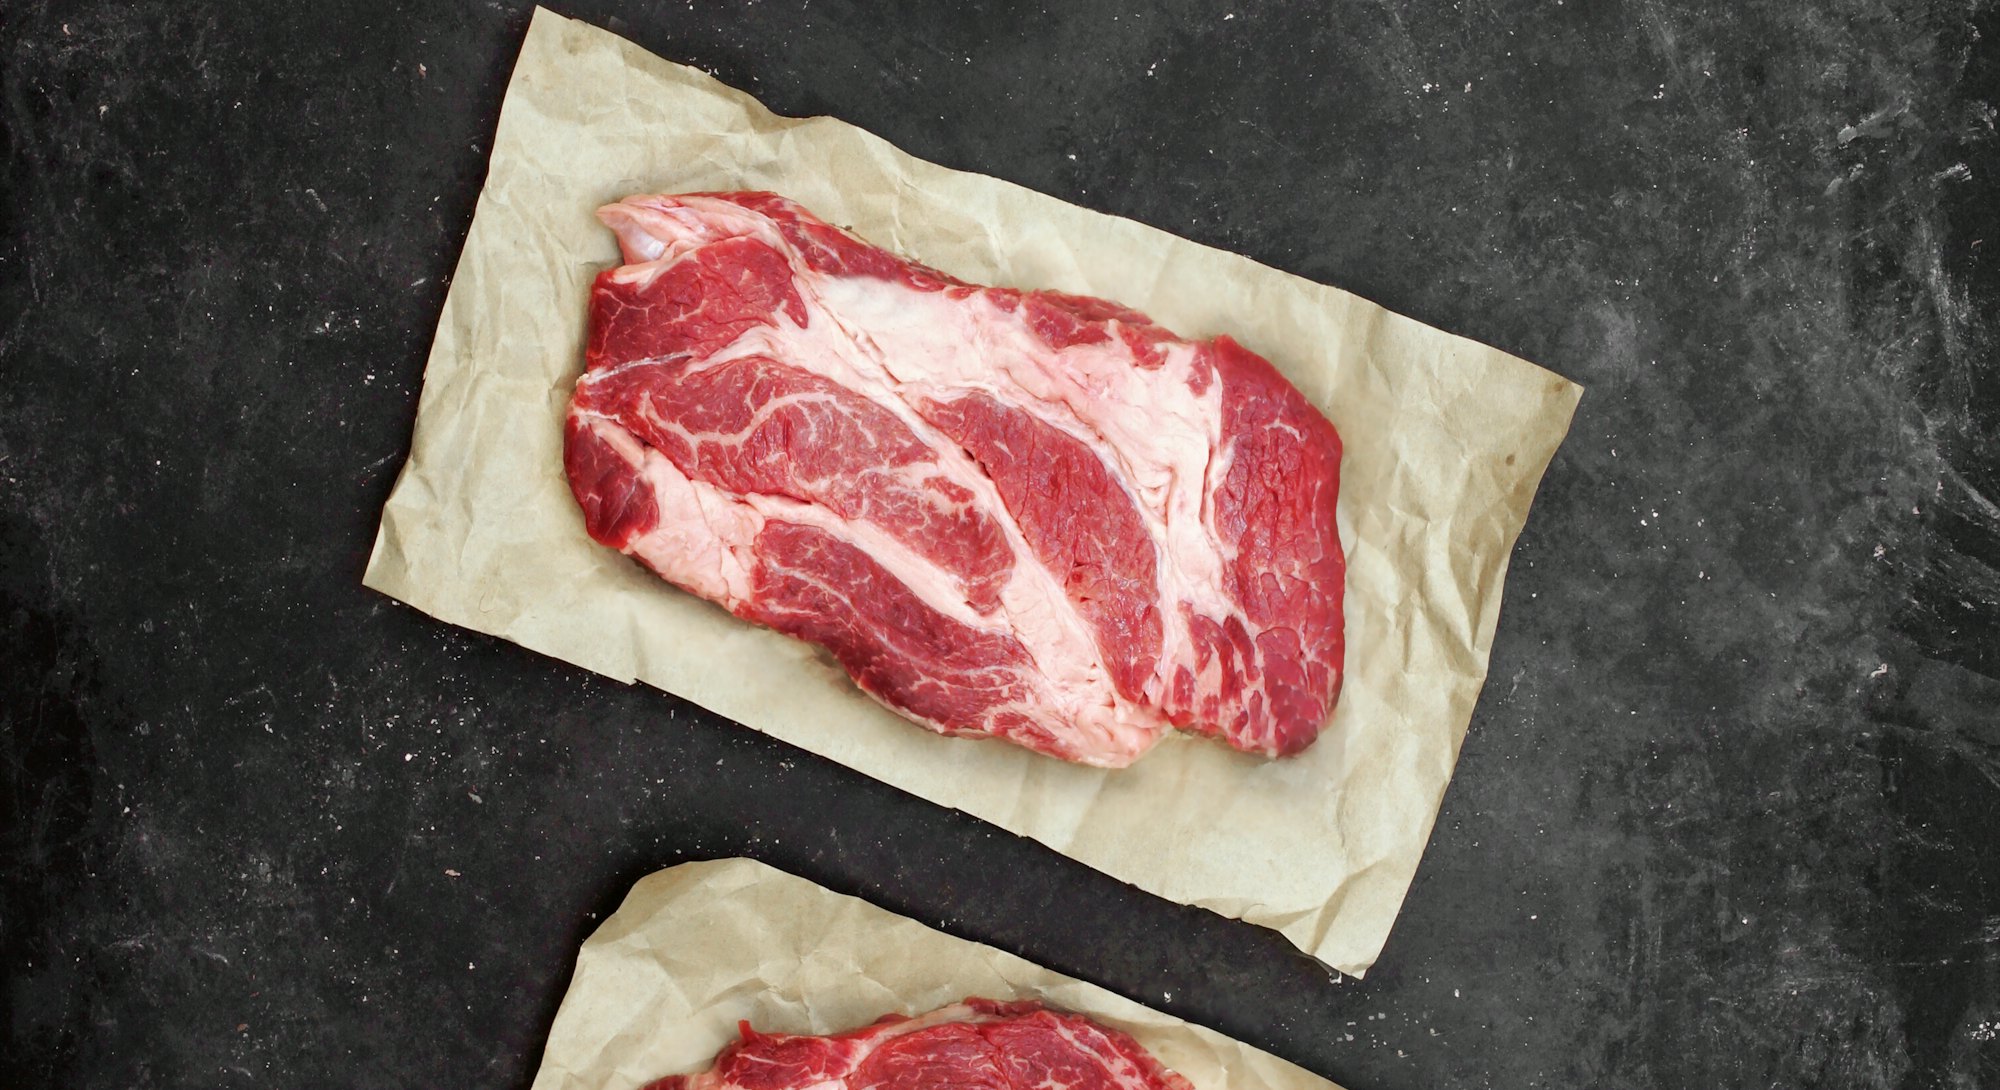 Raw Marbled Loin Beef Steaks On Brown Paper. Sirloin Beef Steaks, Overhead View. Three Raw Striploin...